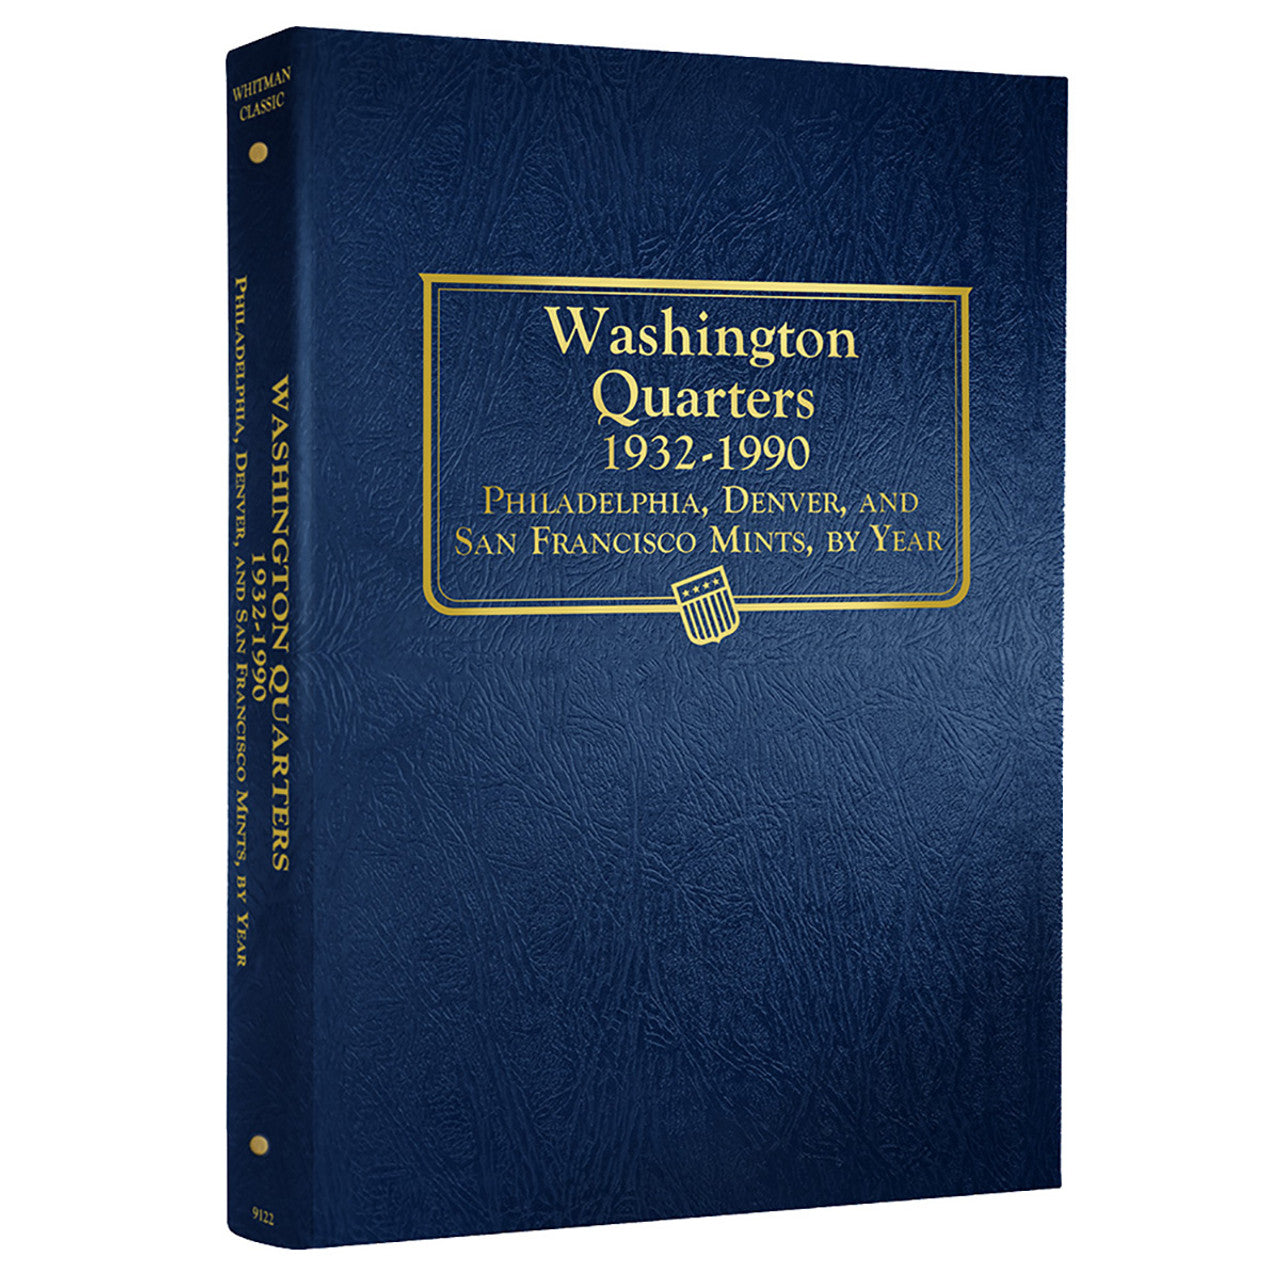 Whitman Wash Quarters 1932-1990 Album